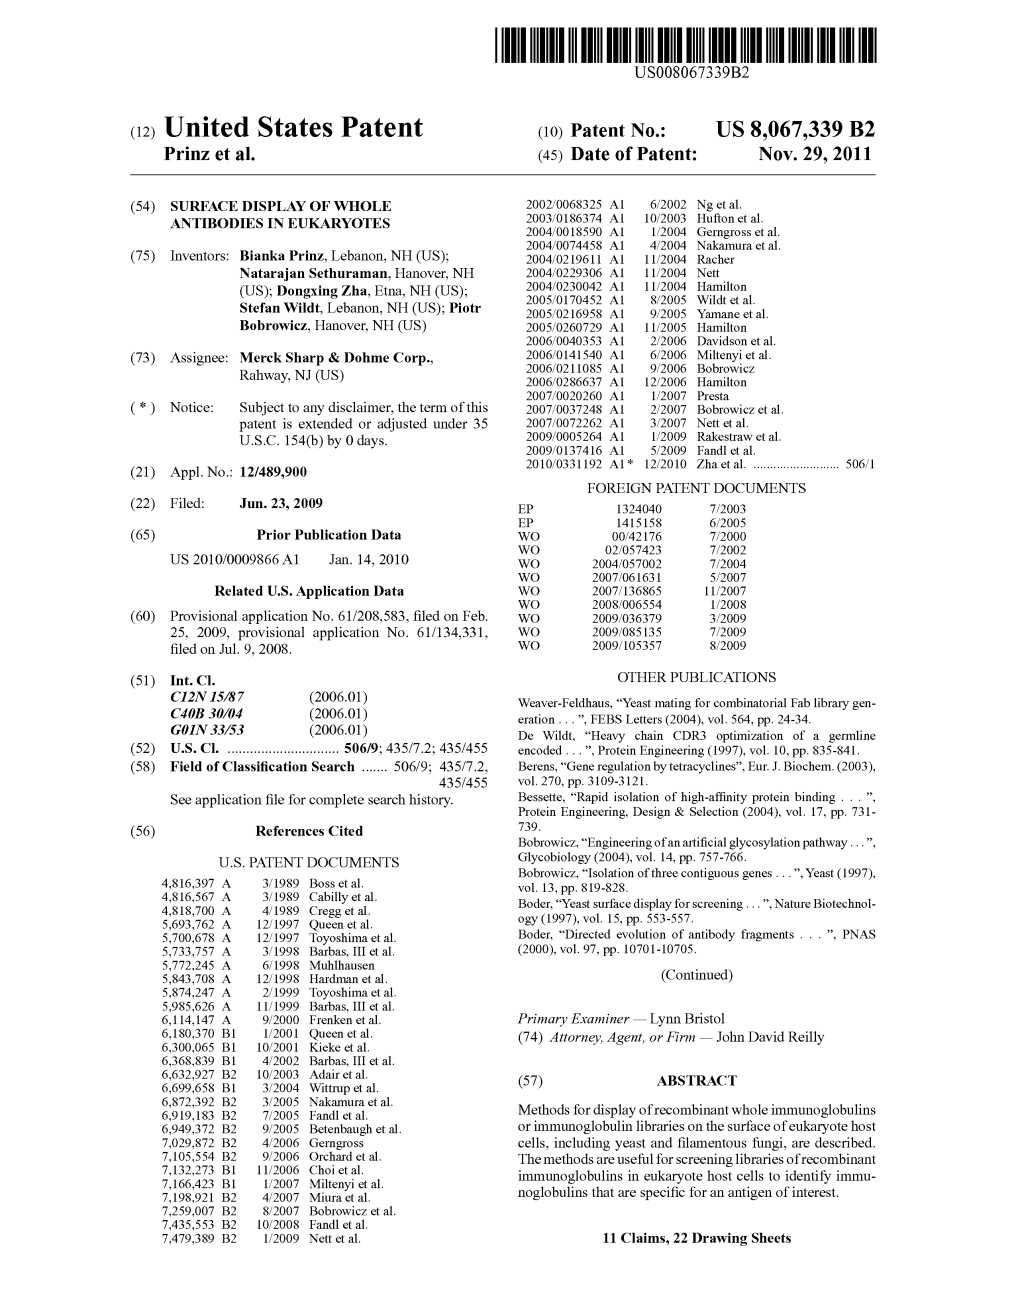 (12) United States Patent (10) Patent No.: US 8,067,339 B2 Prinz Et Al